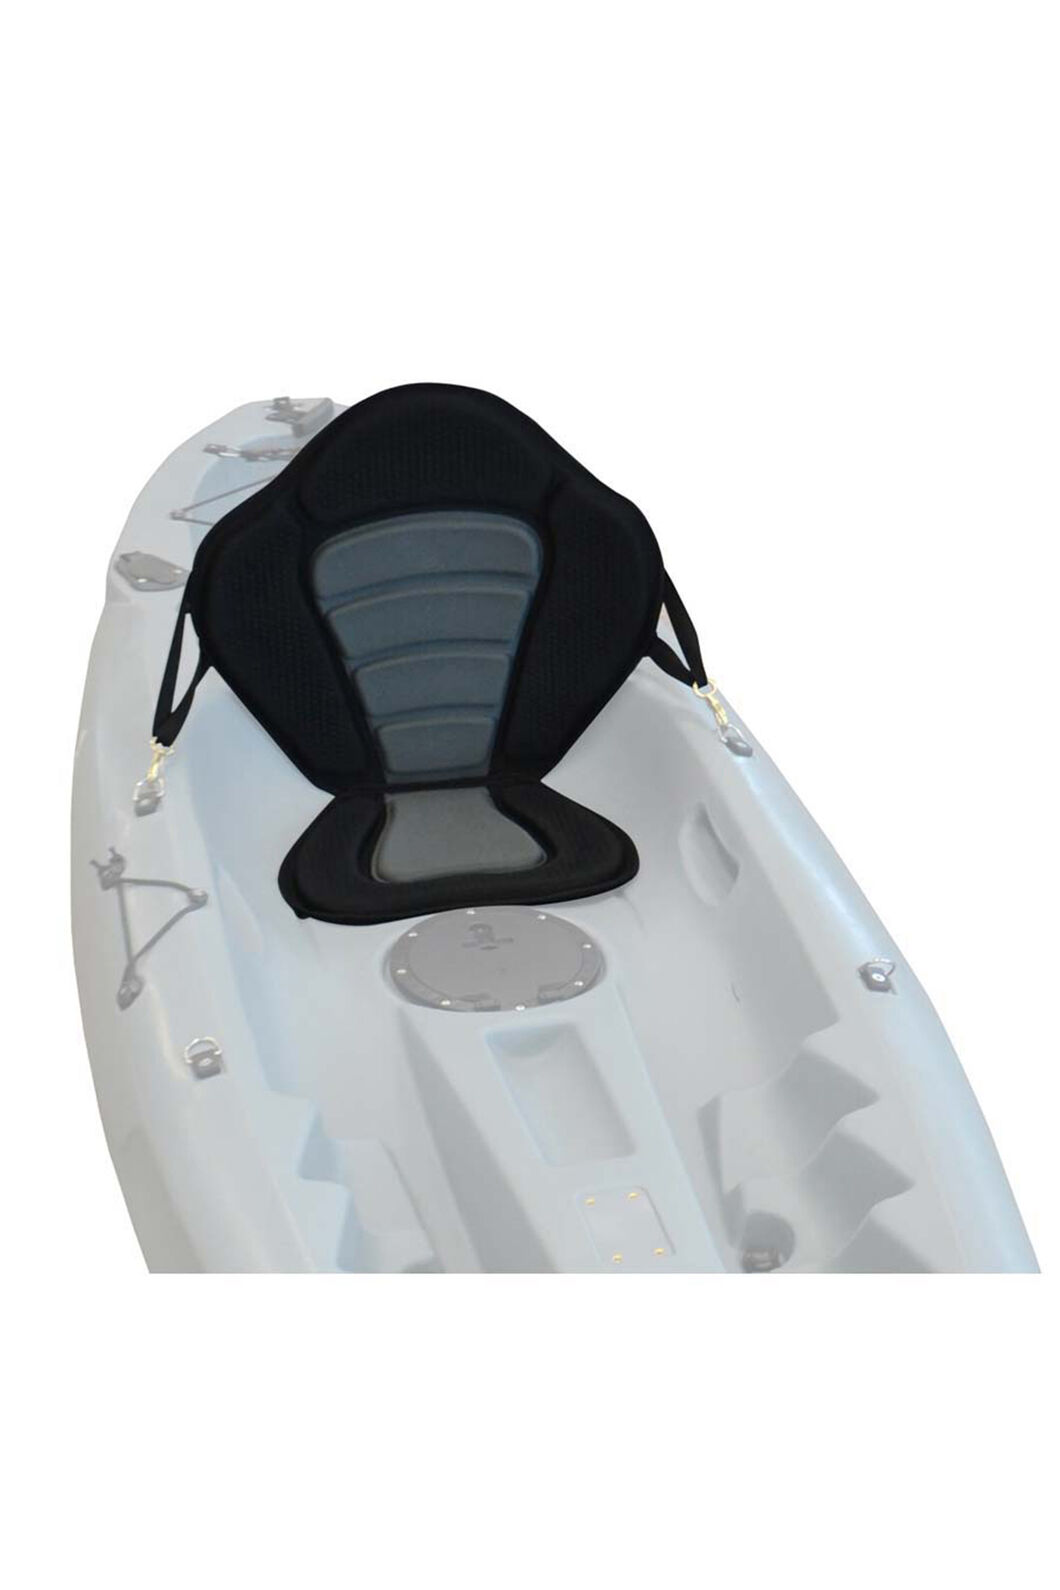 TMP :: Deluxe Kayak Seat